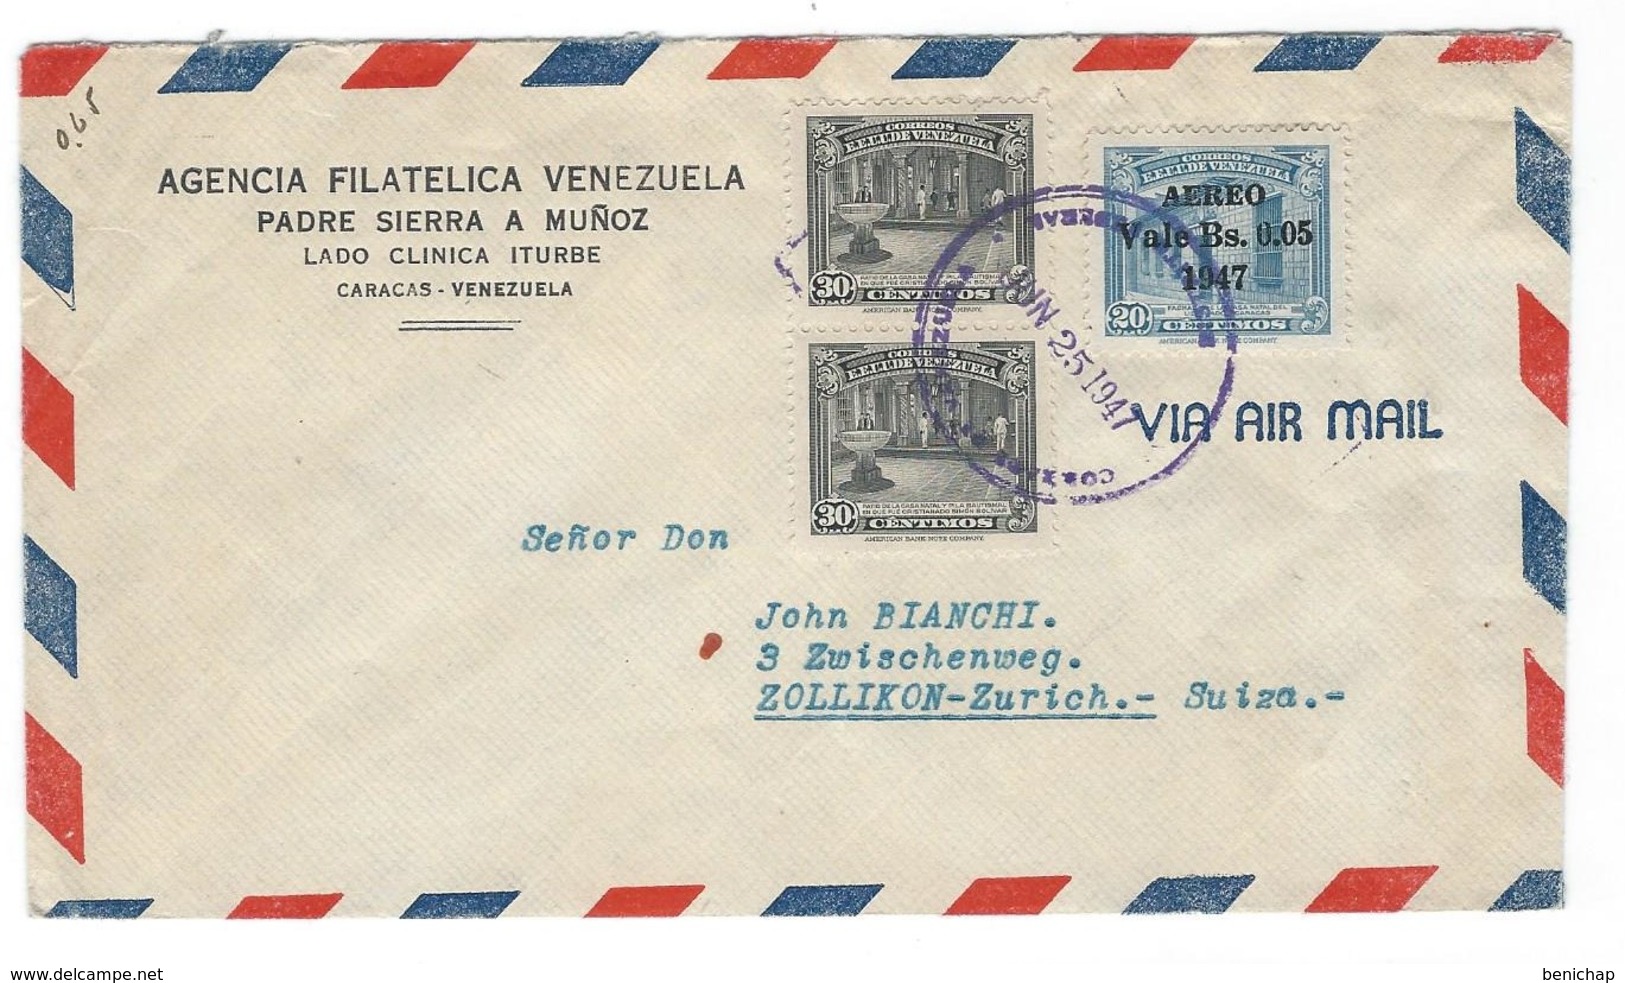 COVER CORREO AEREO VENEZUELA - CARACAS - ZOLLIKON - SUIZA.- AGENCIA FILATELICA  VENEZUELA -1947. - Venezuela